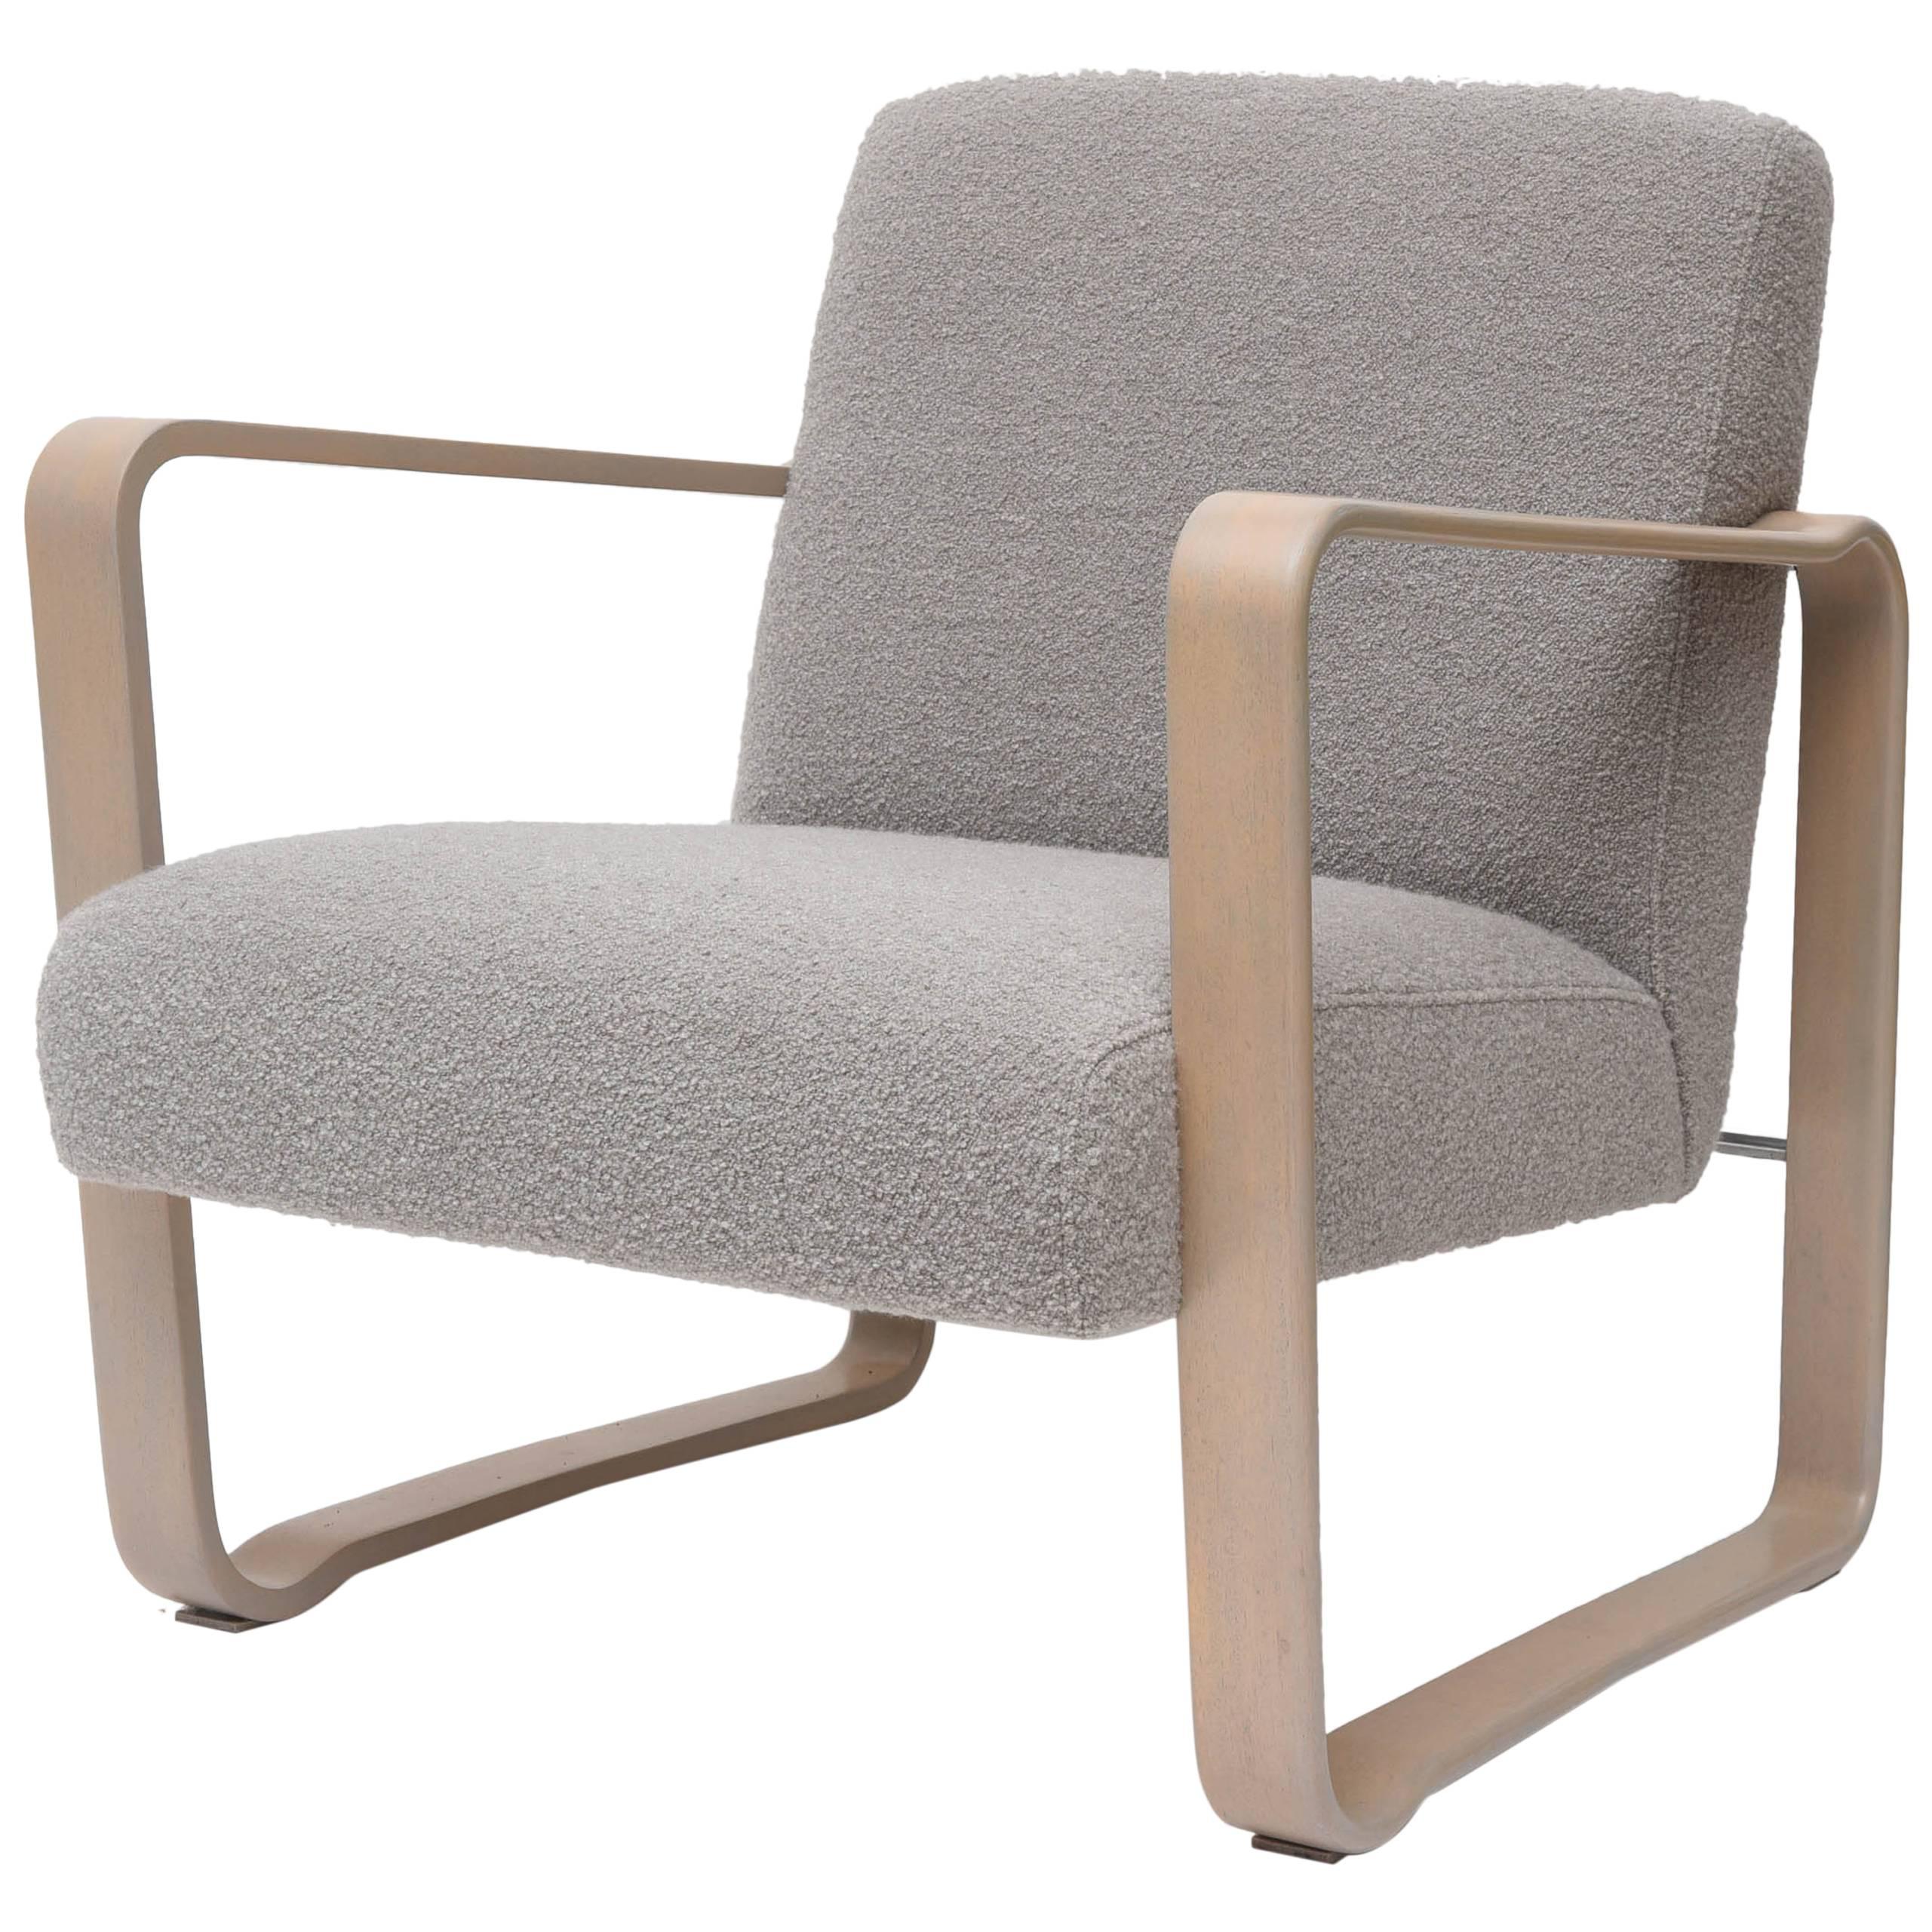 Edward Wormley "Modern Morris Chair" 